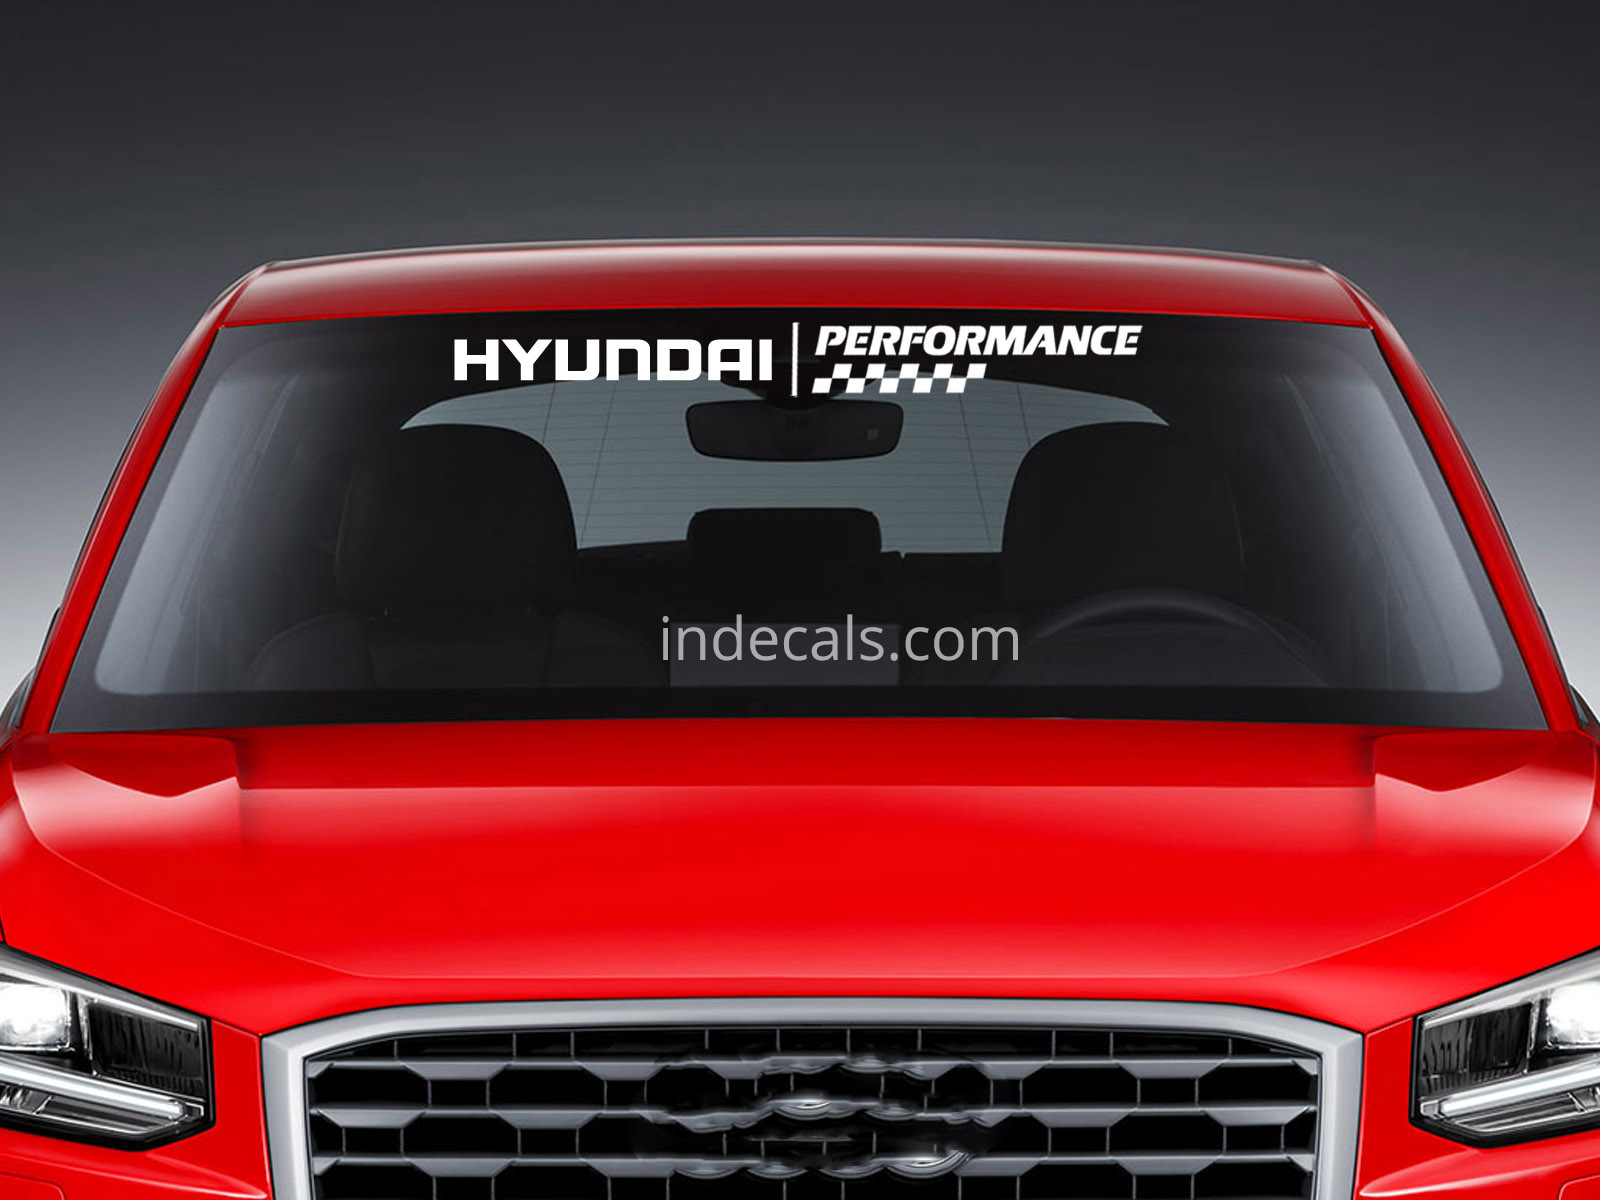 1 x Hyundai Performance Sticker for Windshield or Back Window - White